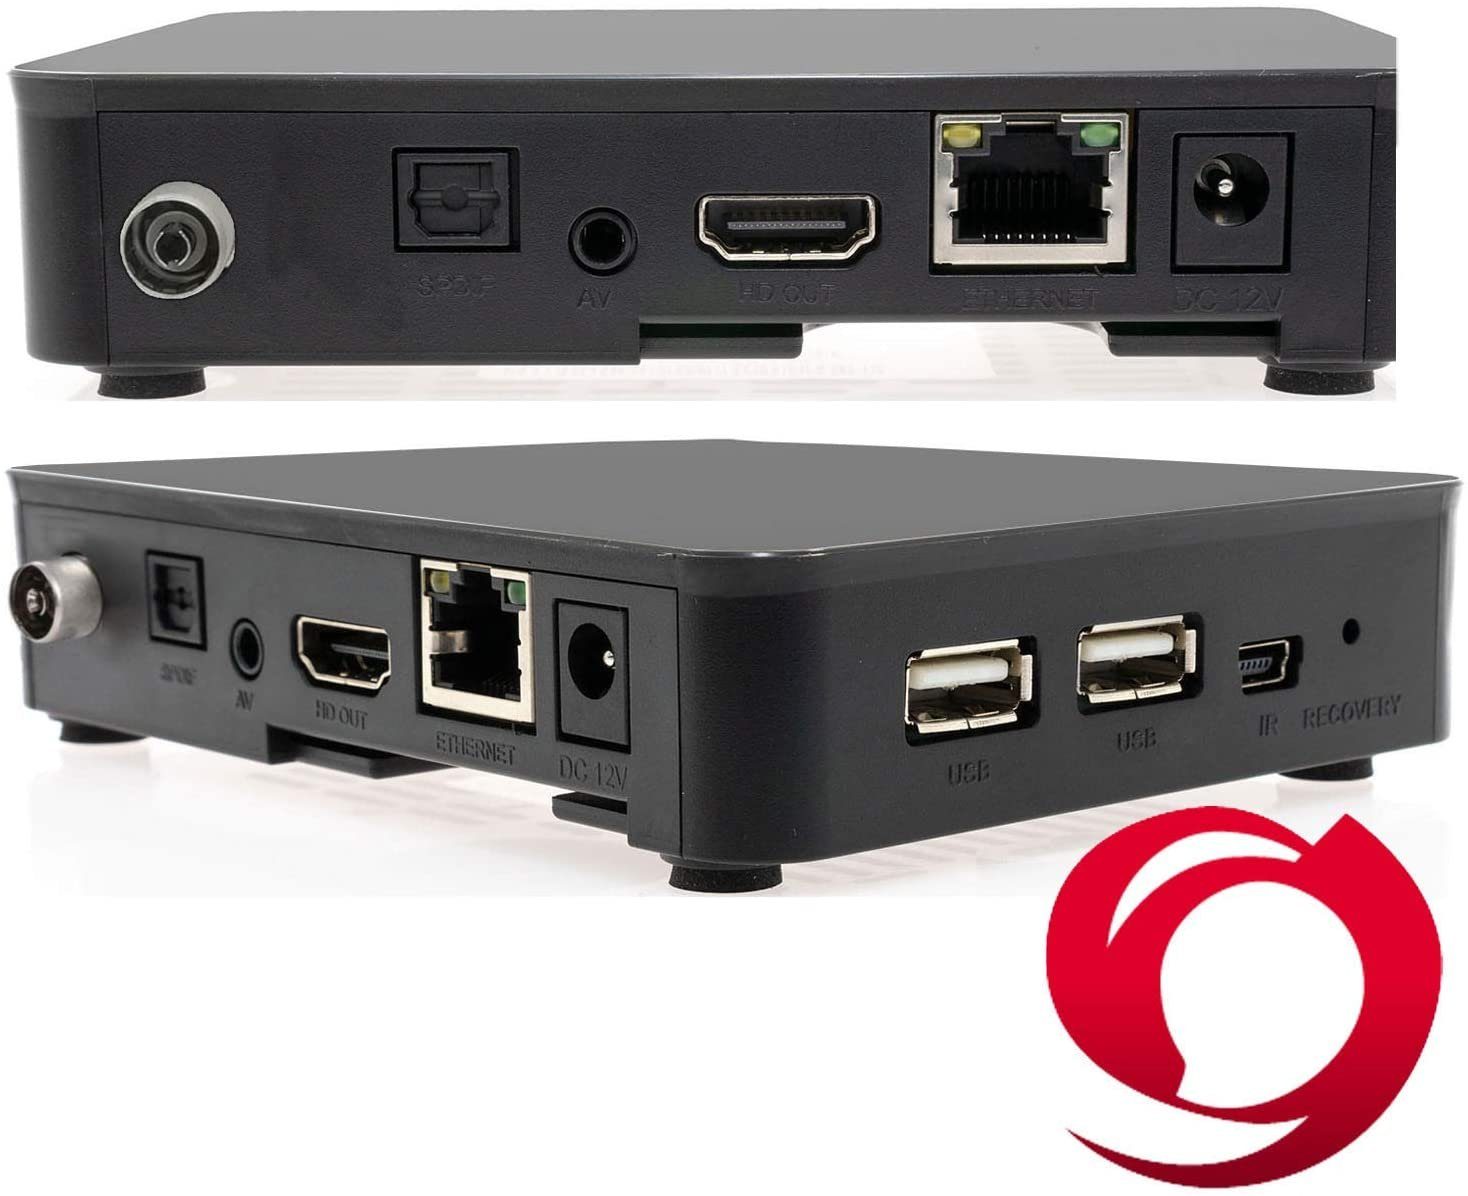 SX88+ SE IPTV C/T2 HD + H.265 Kabel-Receiver Mini Hybrid-Receiver Box Smart OCTAGON